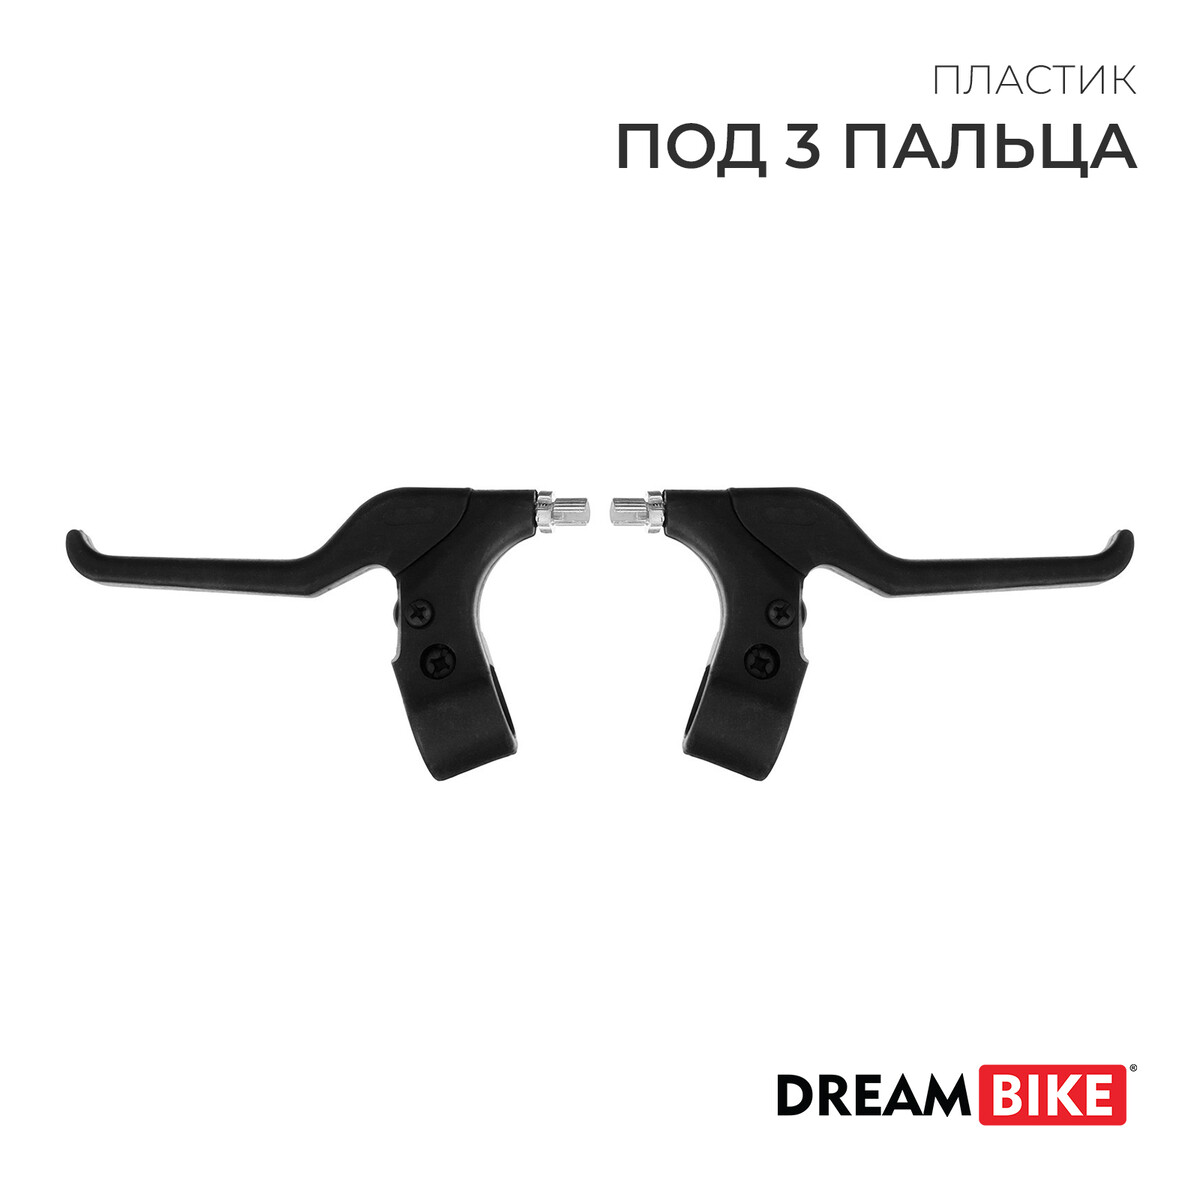 Комплект тормозных ручек dream bike Dream Bike